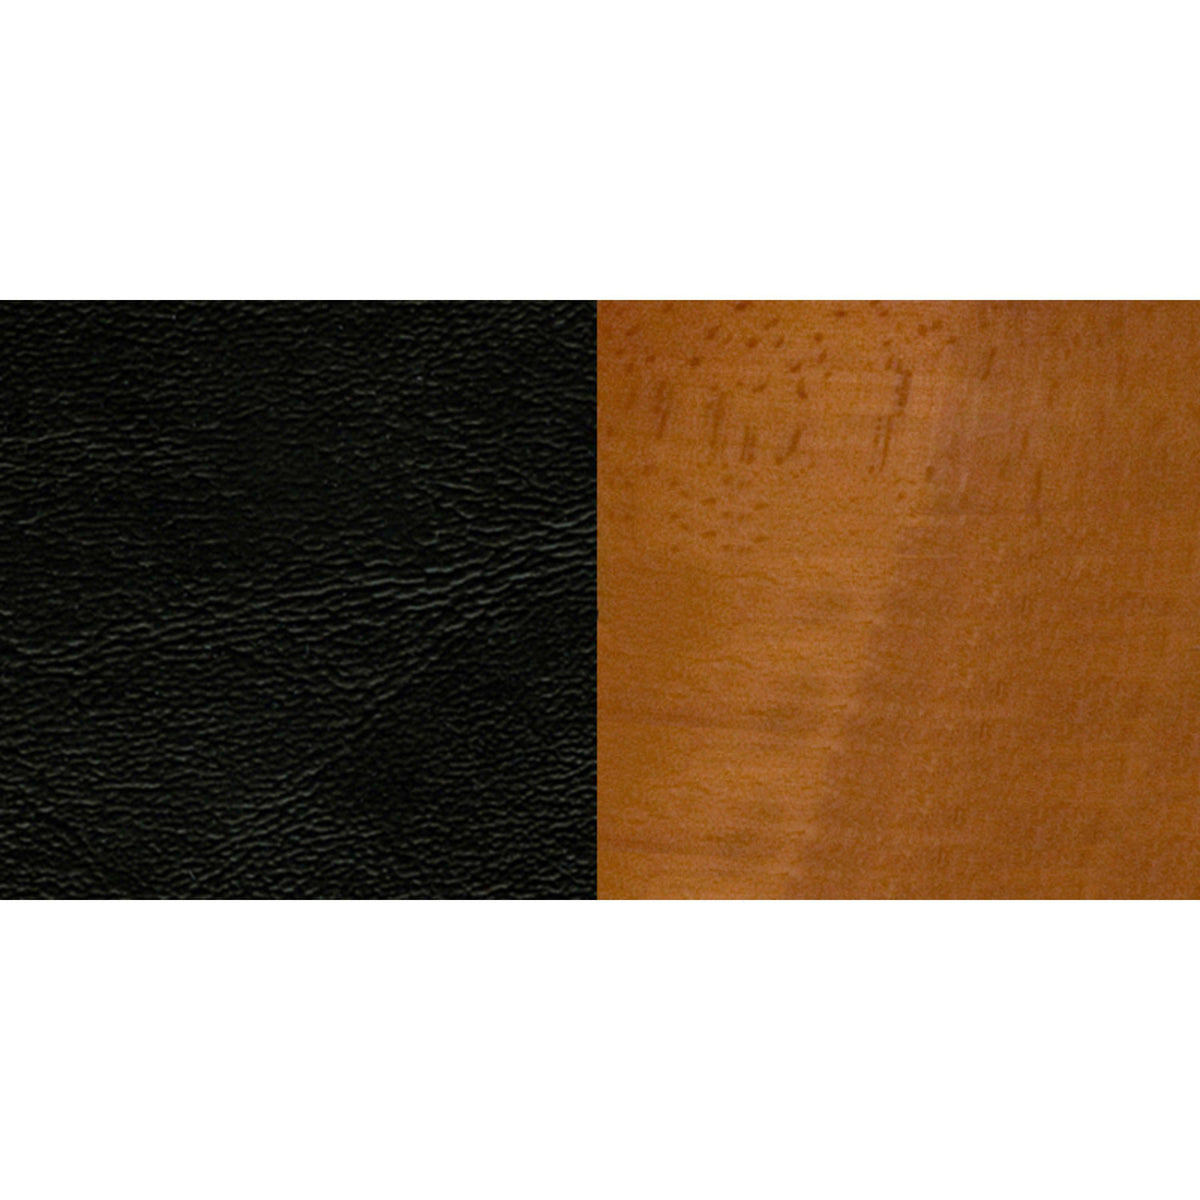 Black Vinyl Seat/Cherry Wood Frame |#| Vertical Slat Back Cherry Wood Restaurant Chair - Black Vinyl Seat